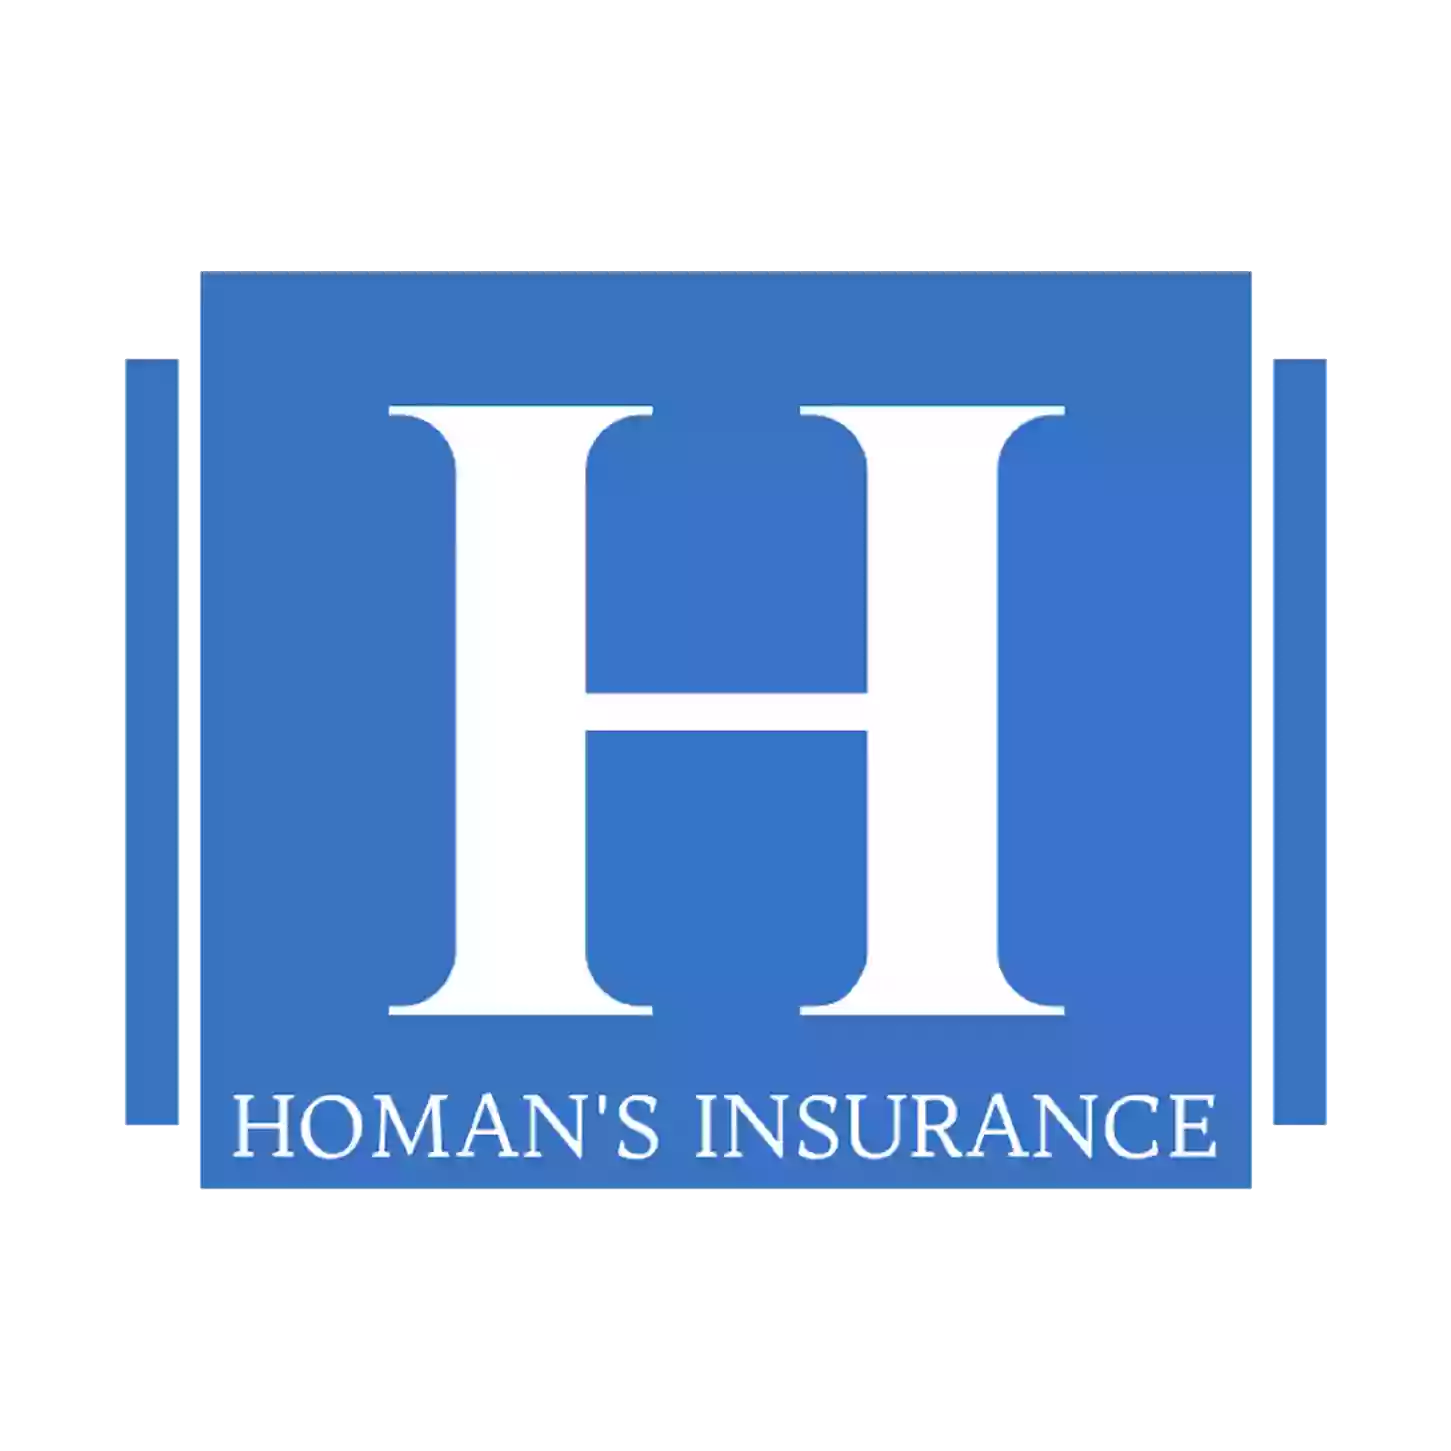 Homan's Insurance